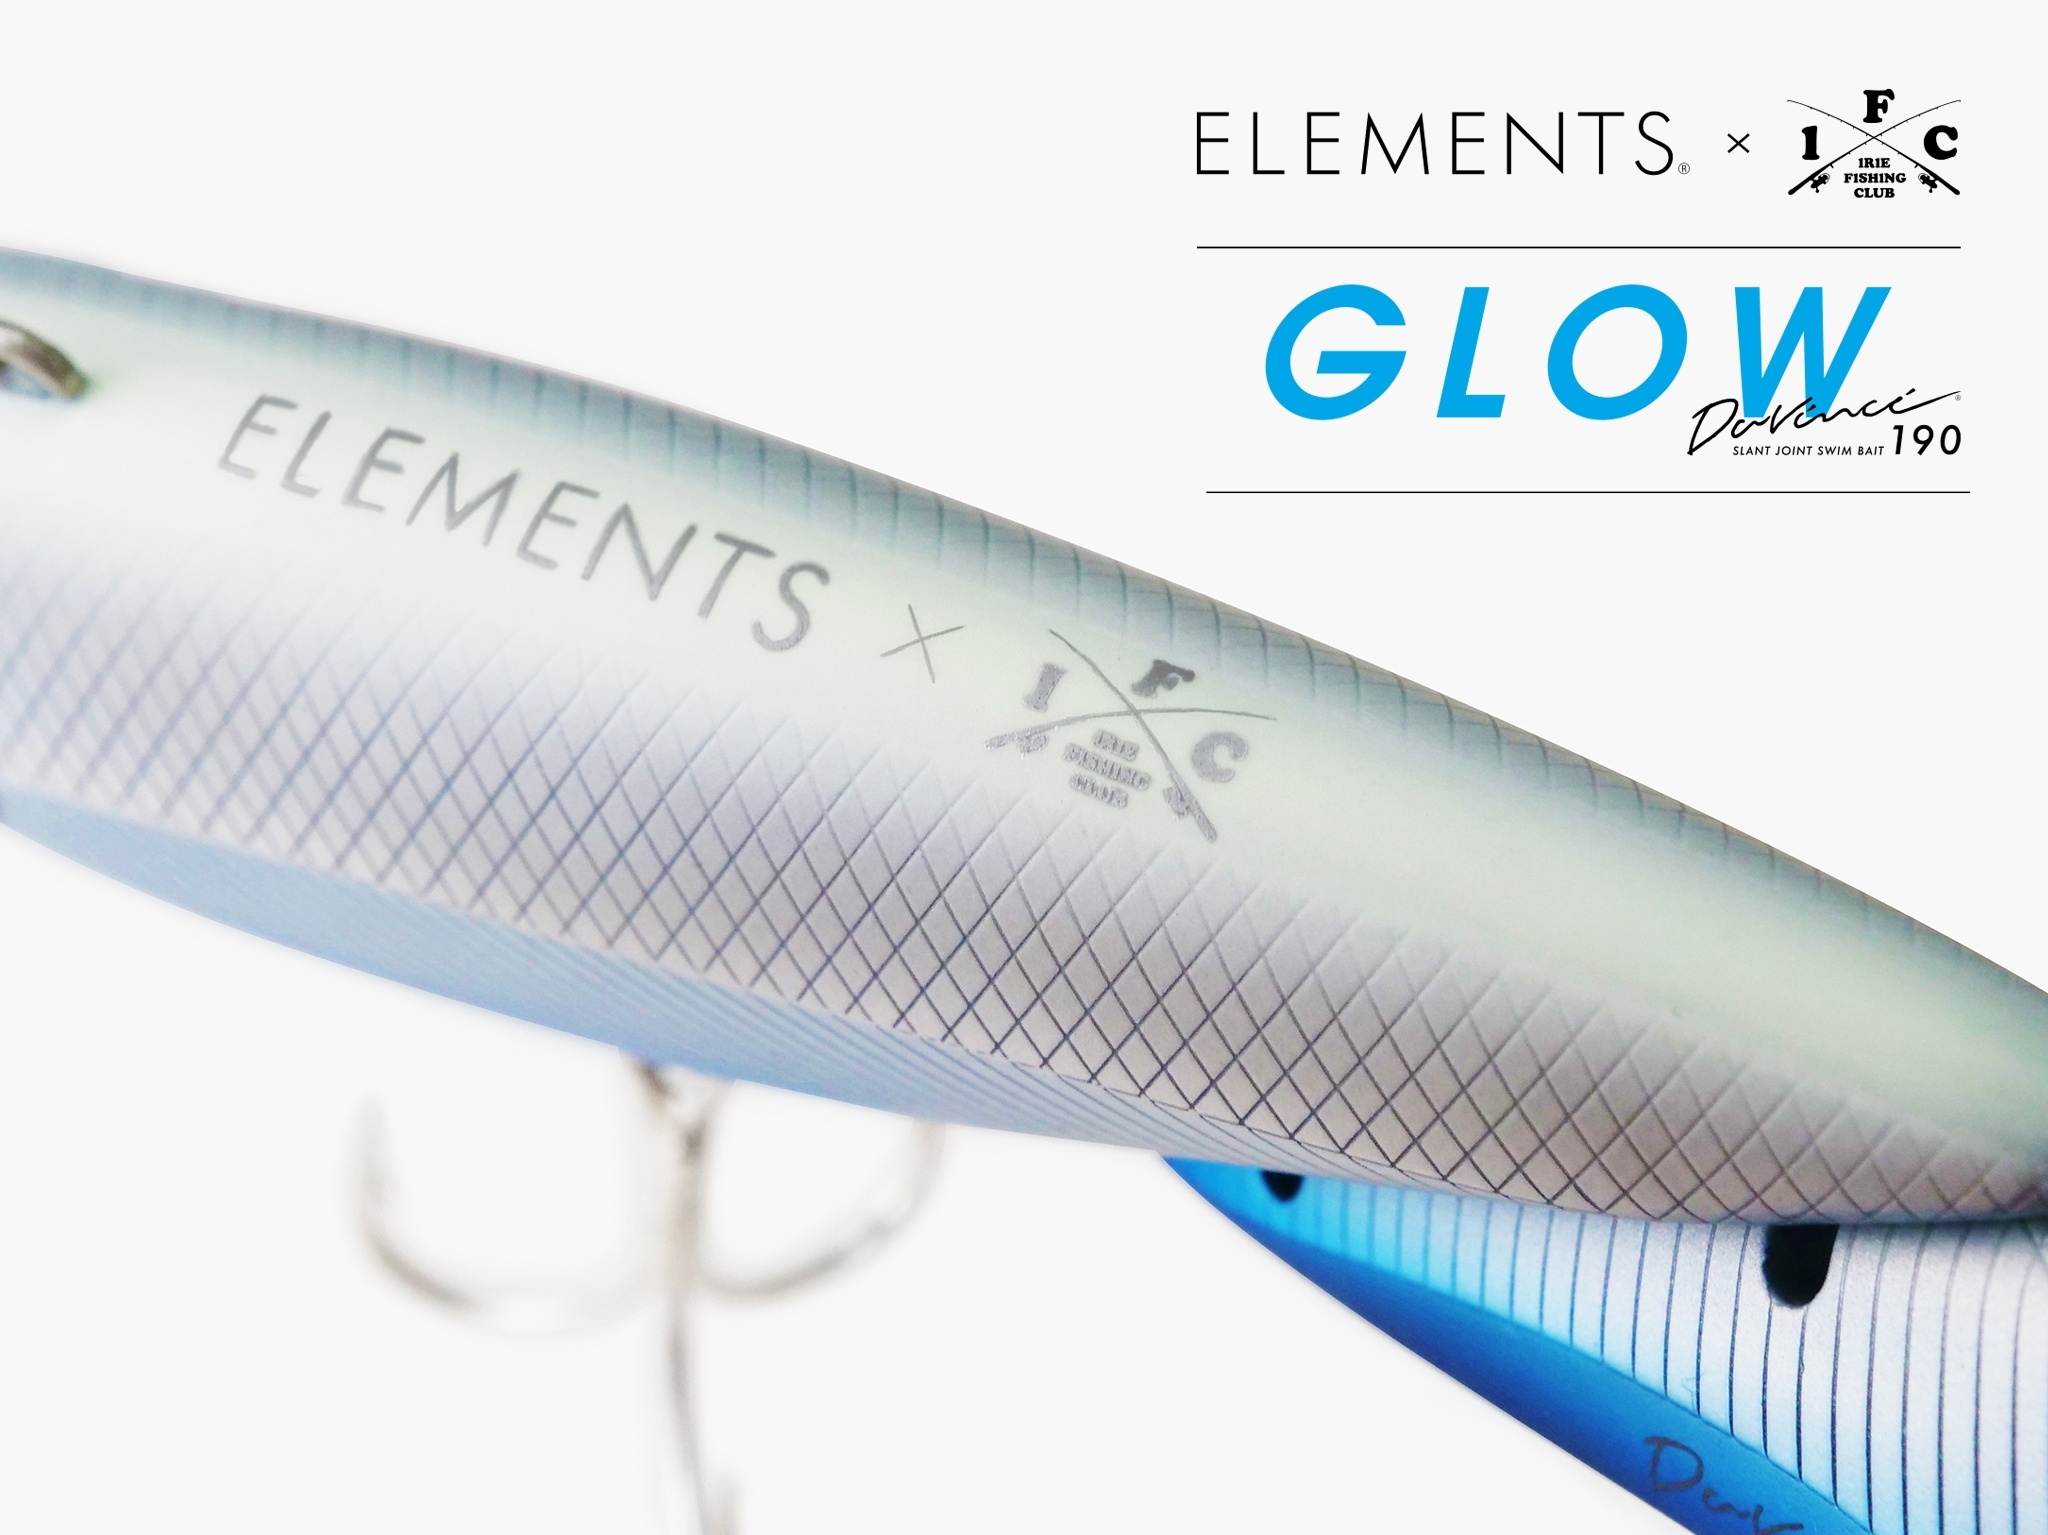 NEW ITEM】-×ELEMENTS Davinci 190 “GLOW”- | IRIE FISHING CLUB